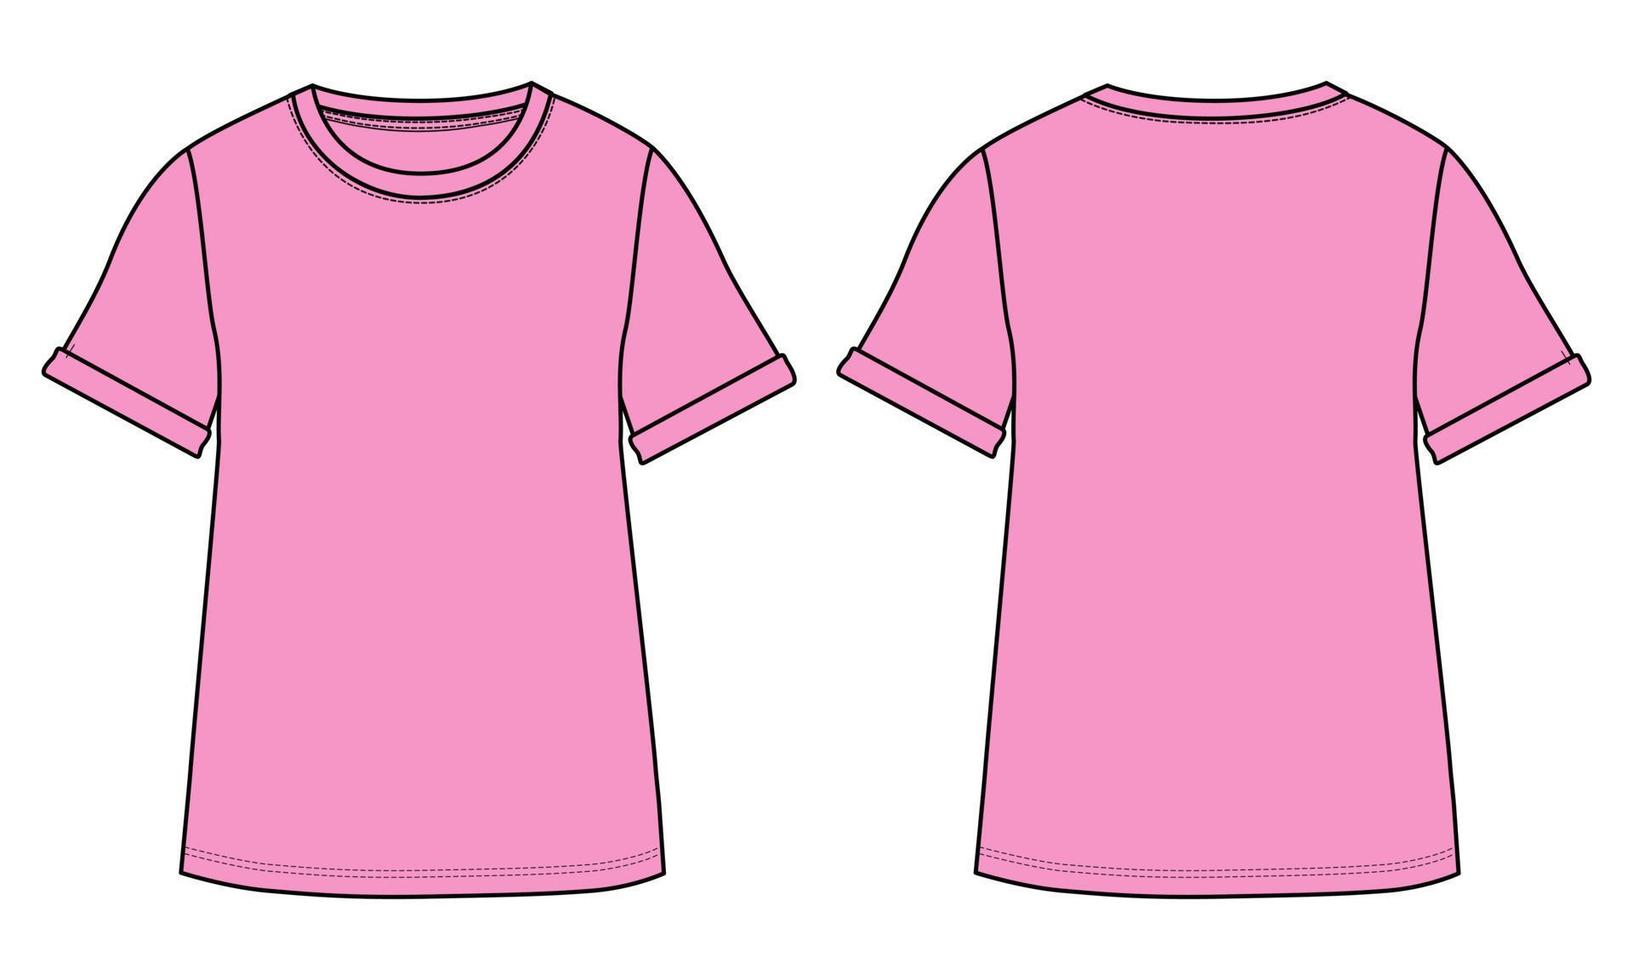 camiseta de manga corta ilustración vectorial plantilla de color púrpura para damas. vector